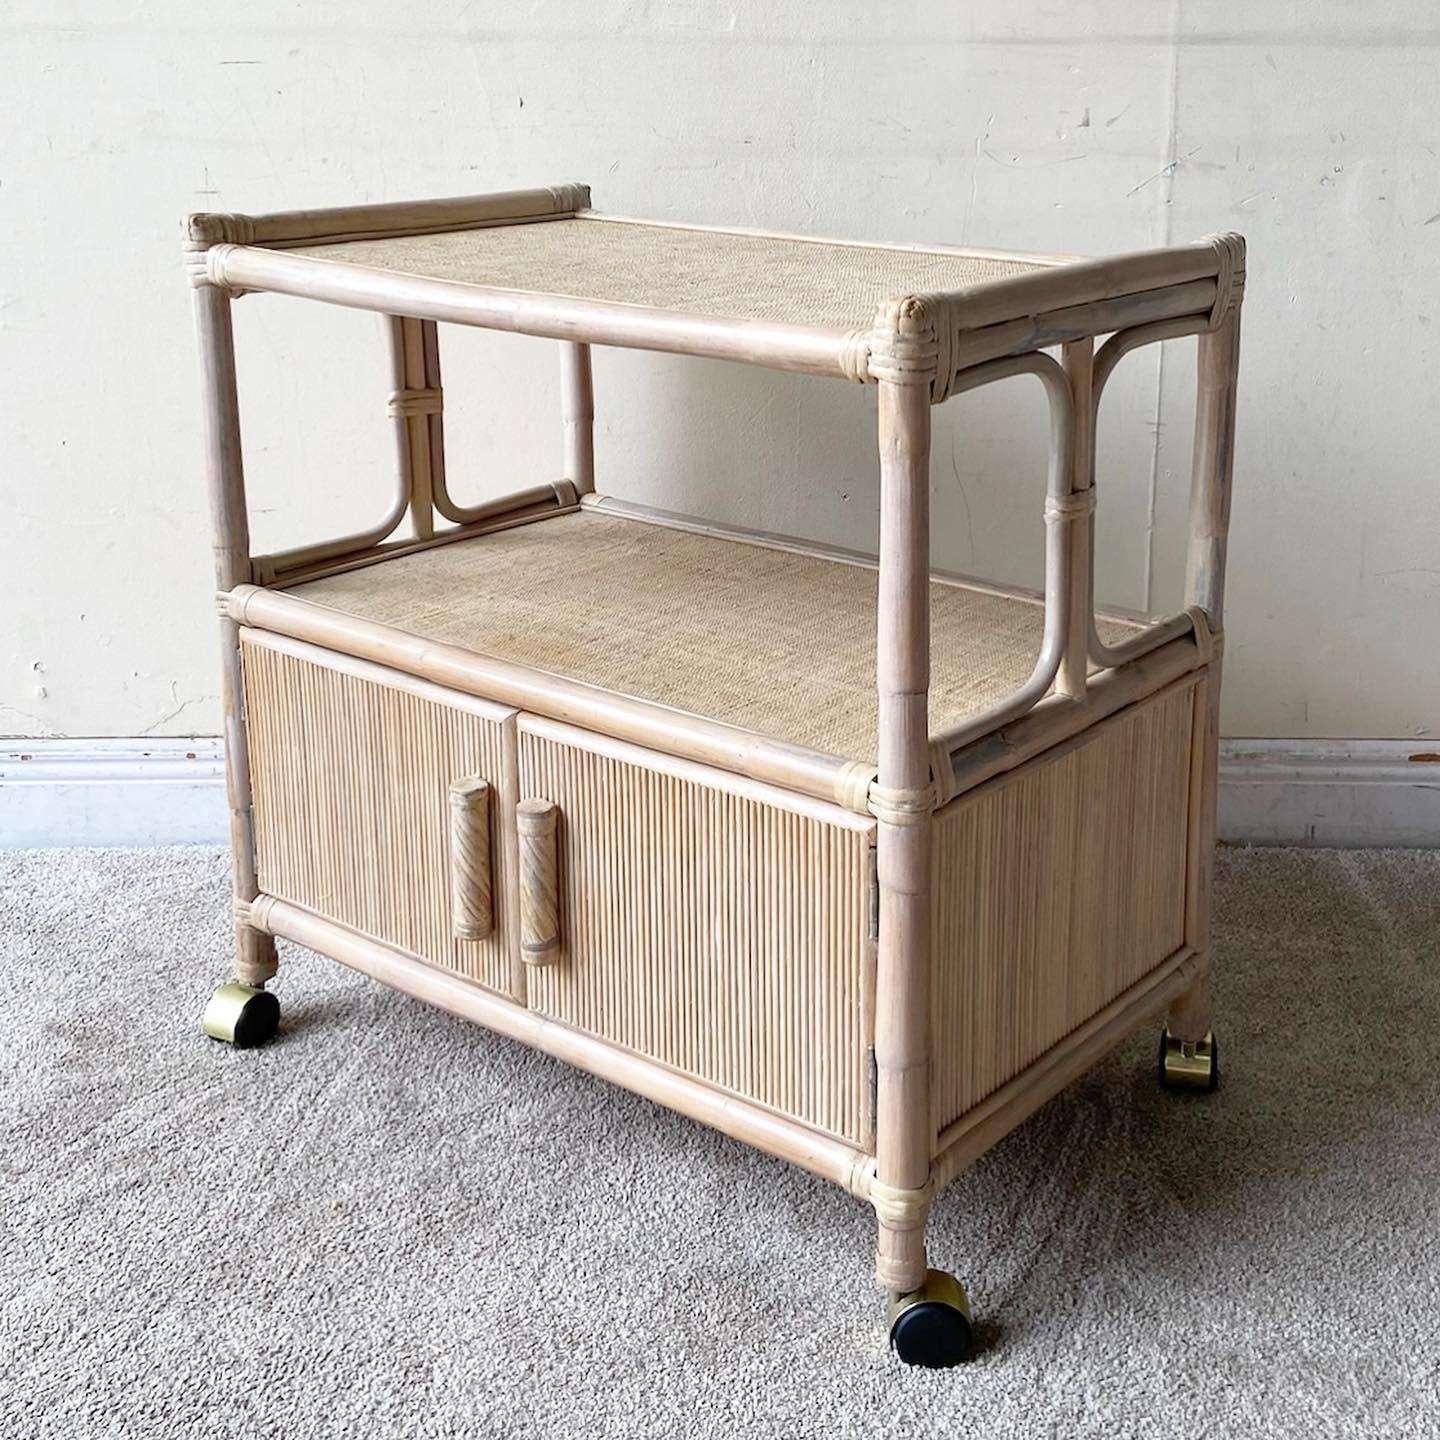 Amazing boho chic bamboo rattan cart. Features teen handles and cabinet door with woven woken tops on each tier.
